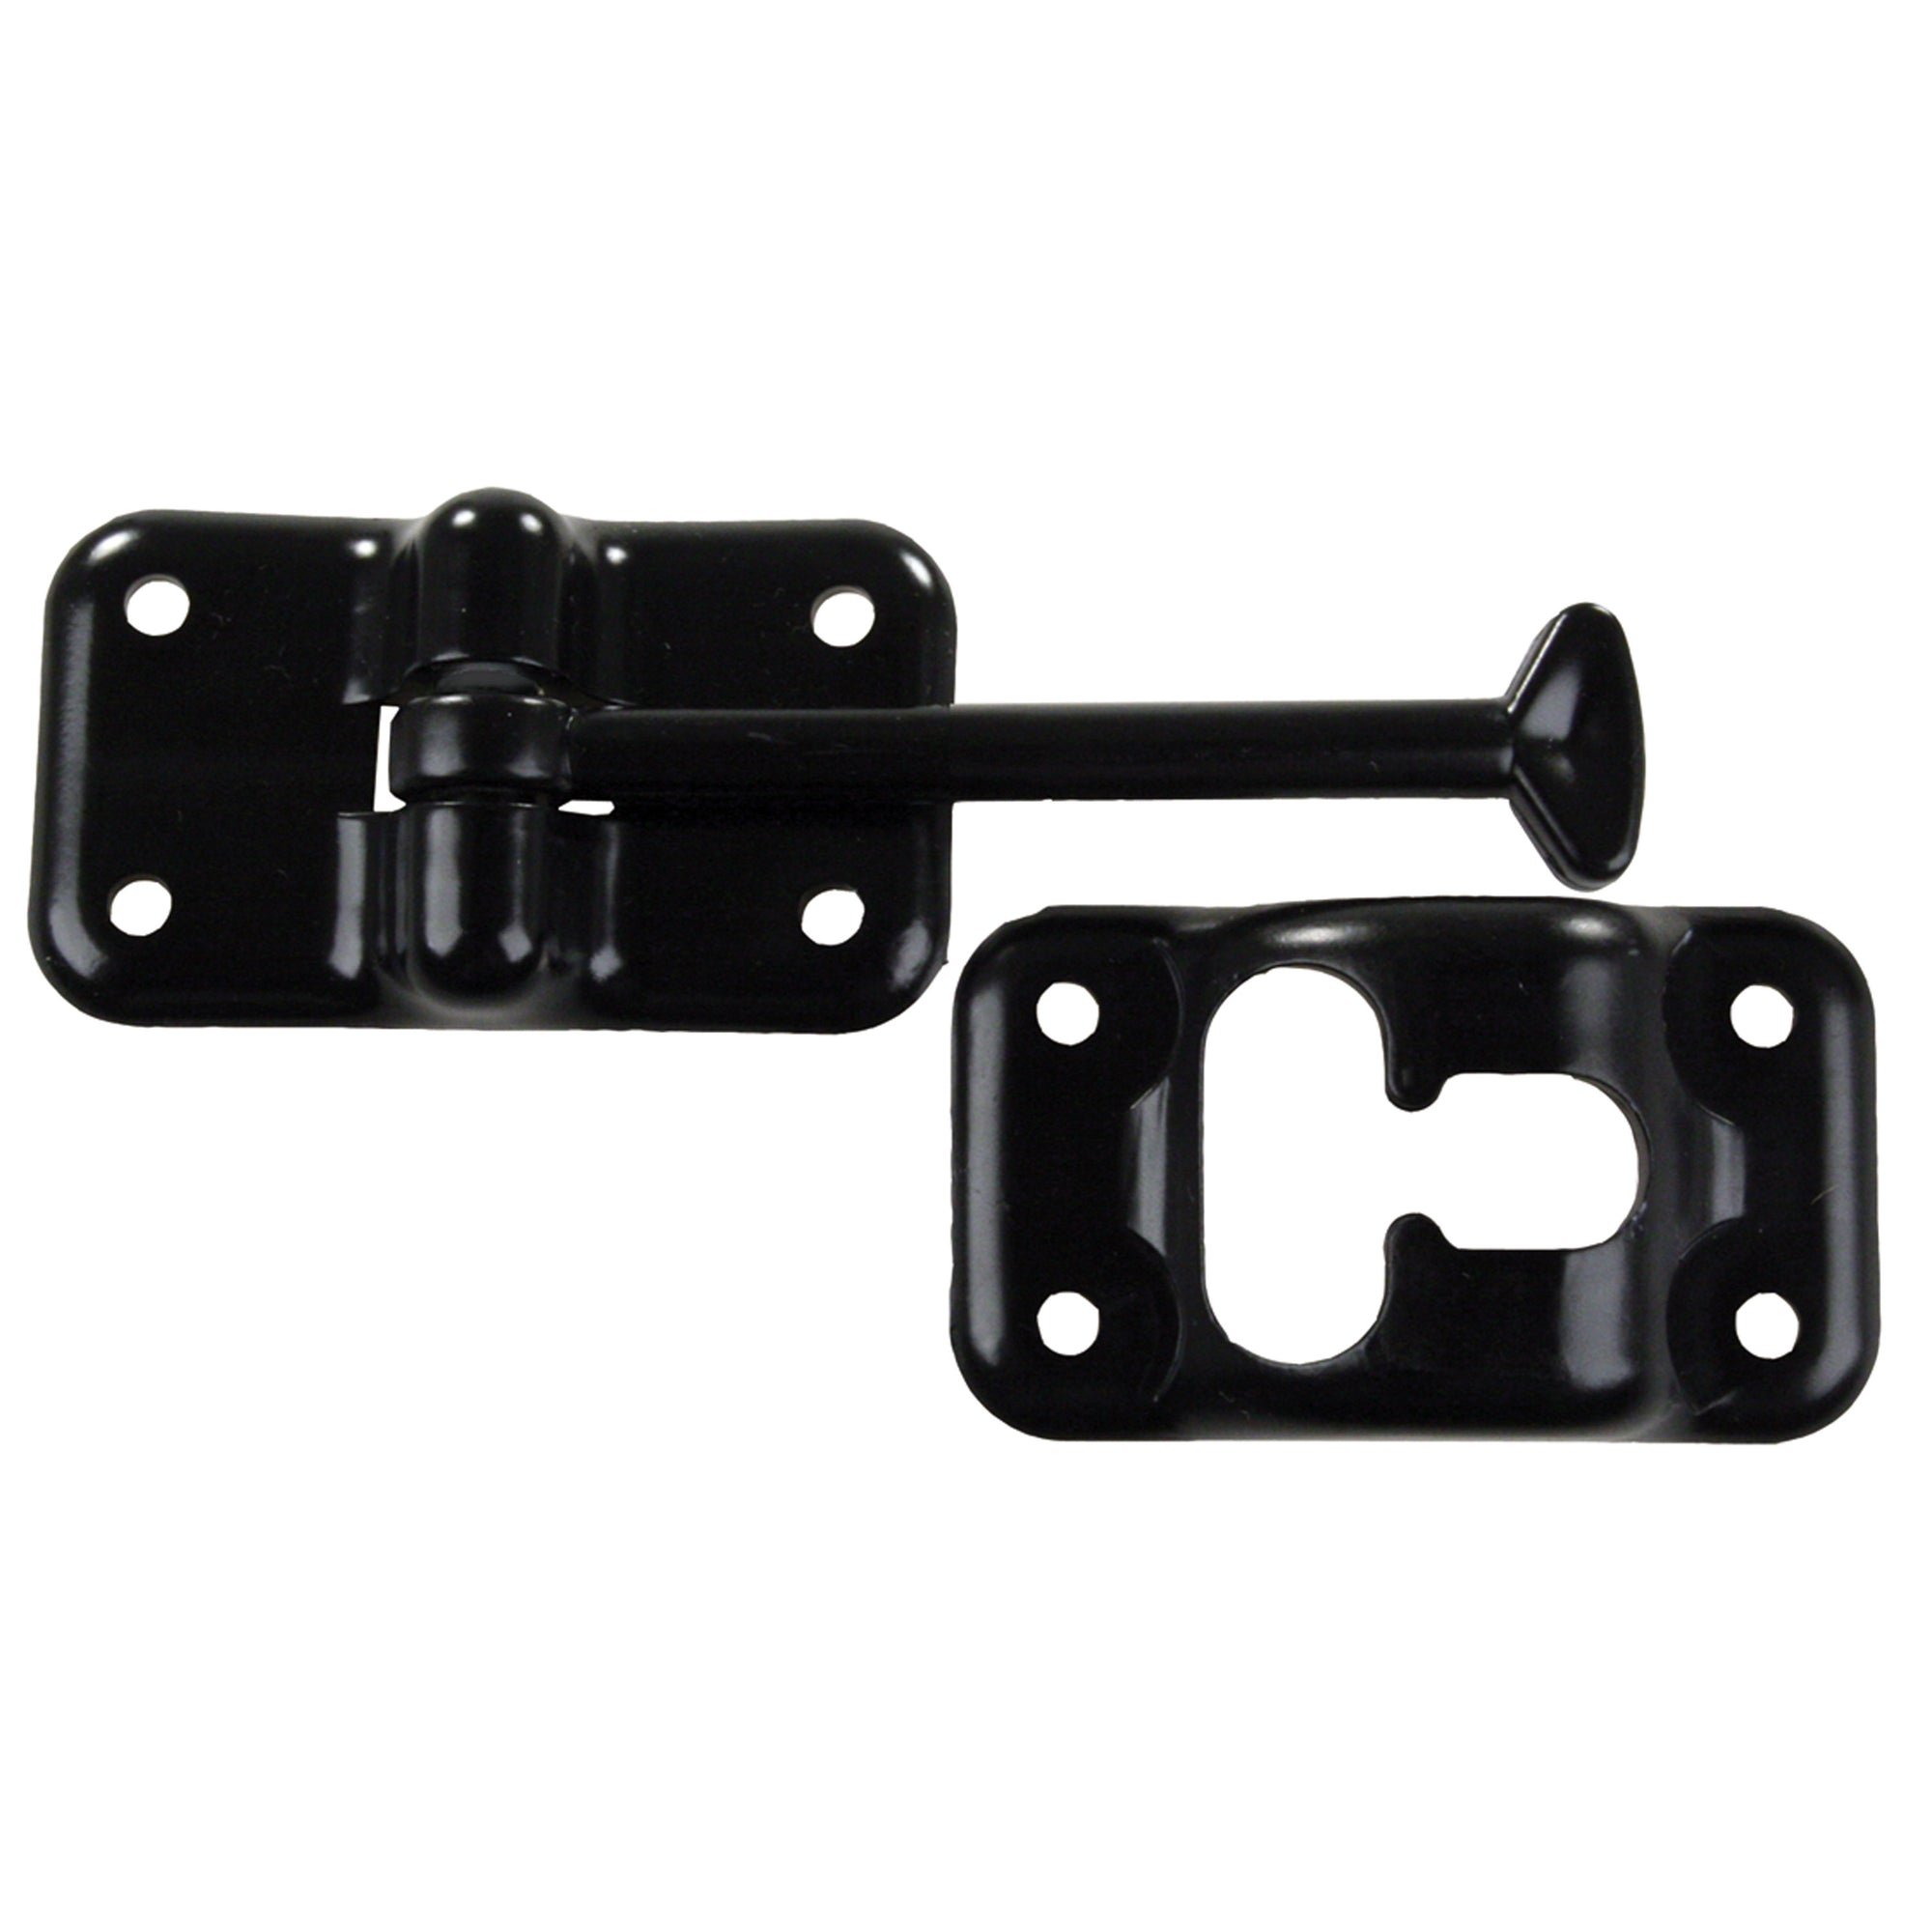 JR Products 10324 Plastic T-Style Door Holder - Black, 3-1/2"